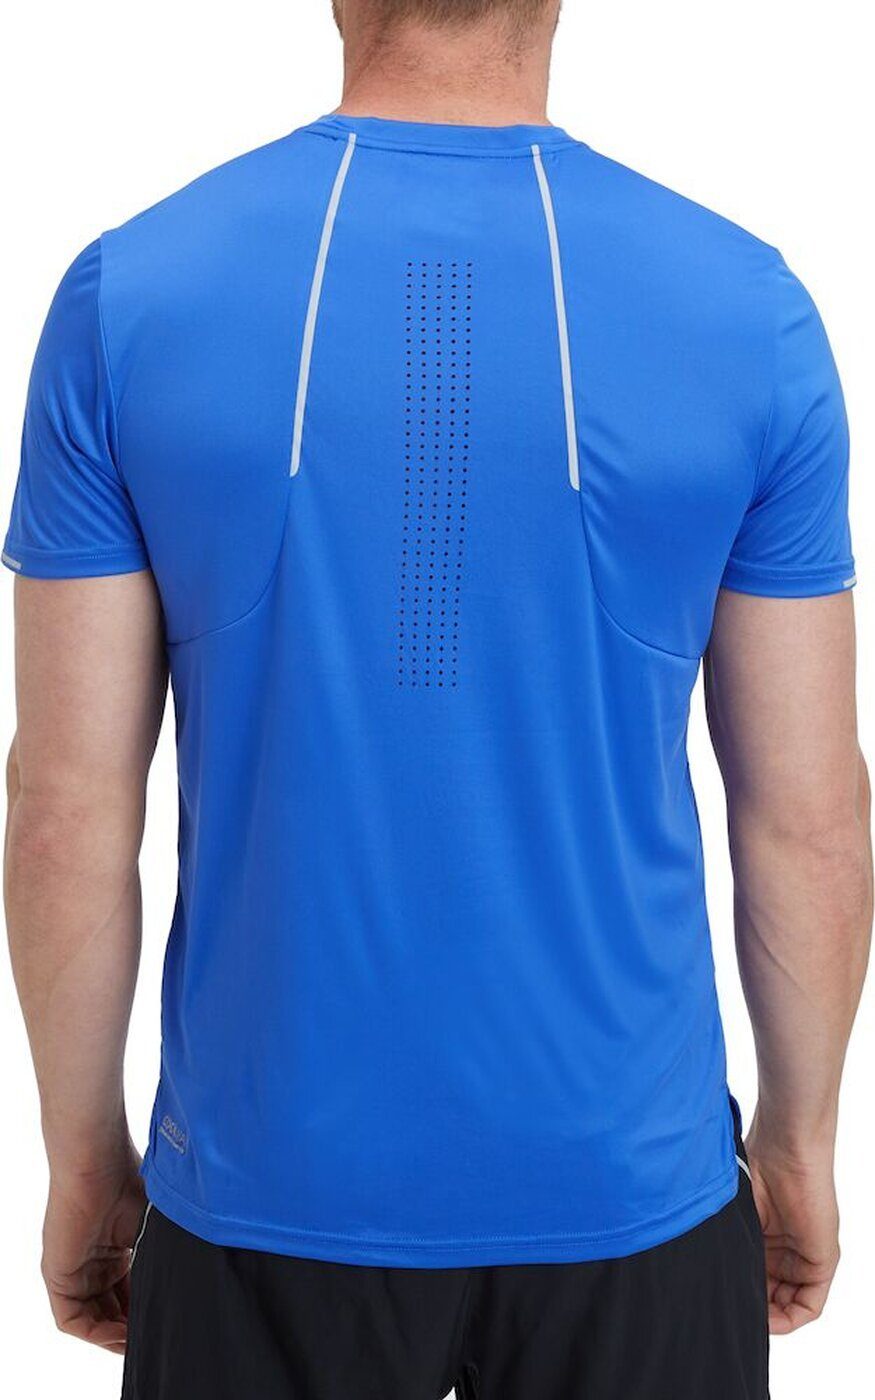 II He.-T-Shirt Funktionsshirt BLUE Energetics Eamon M